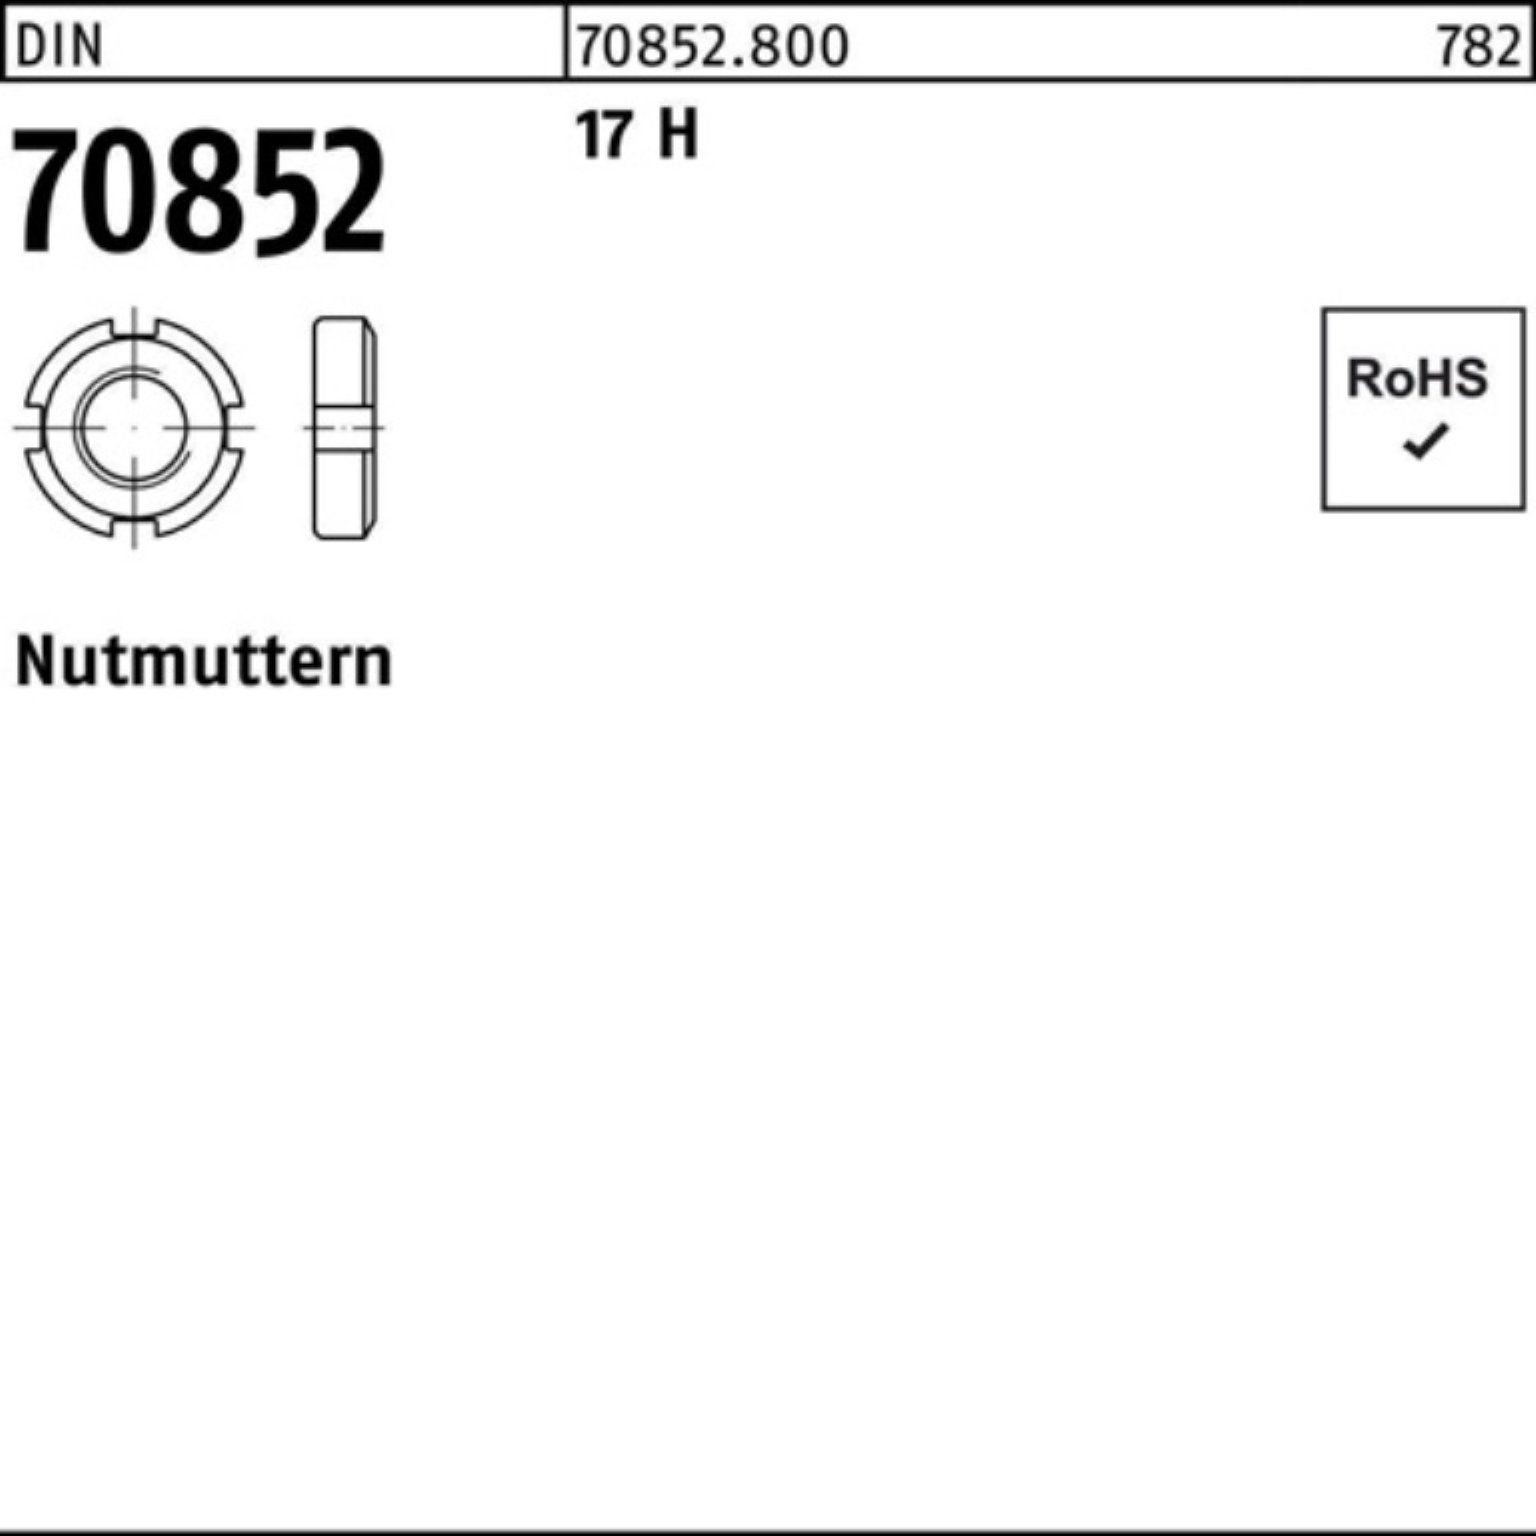 Reyher Nutmutter 100er Pack Nutmutter DIN 70852 M18x 1,5 17 H 10 Stück DIN 70852 17 H